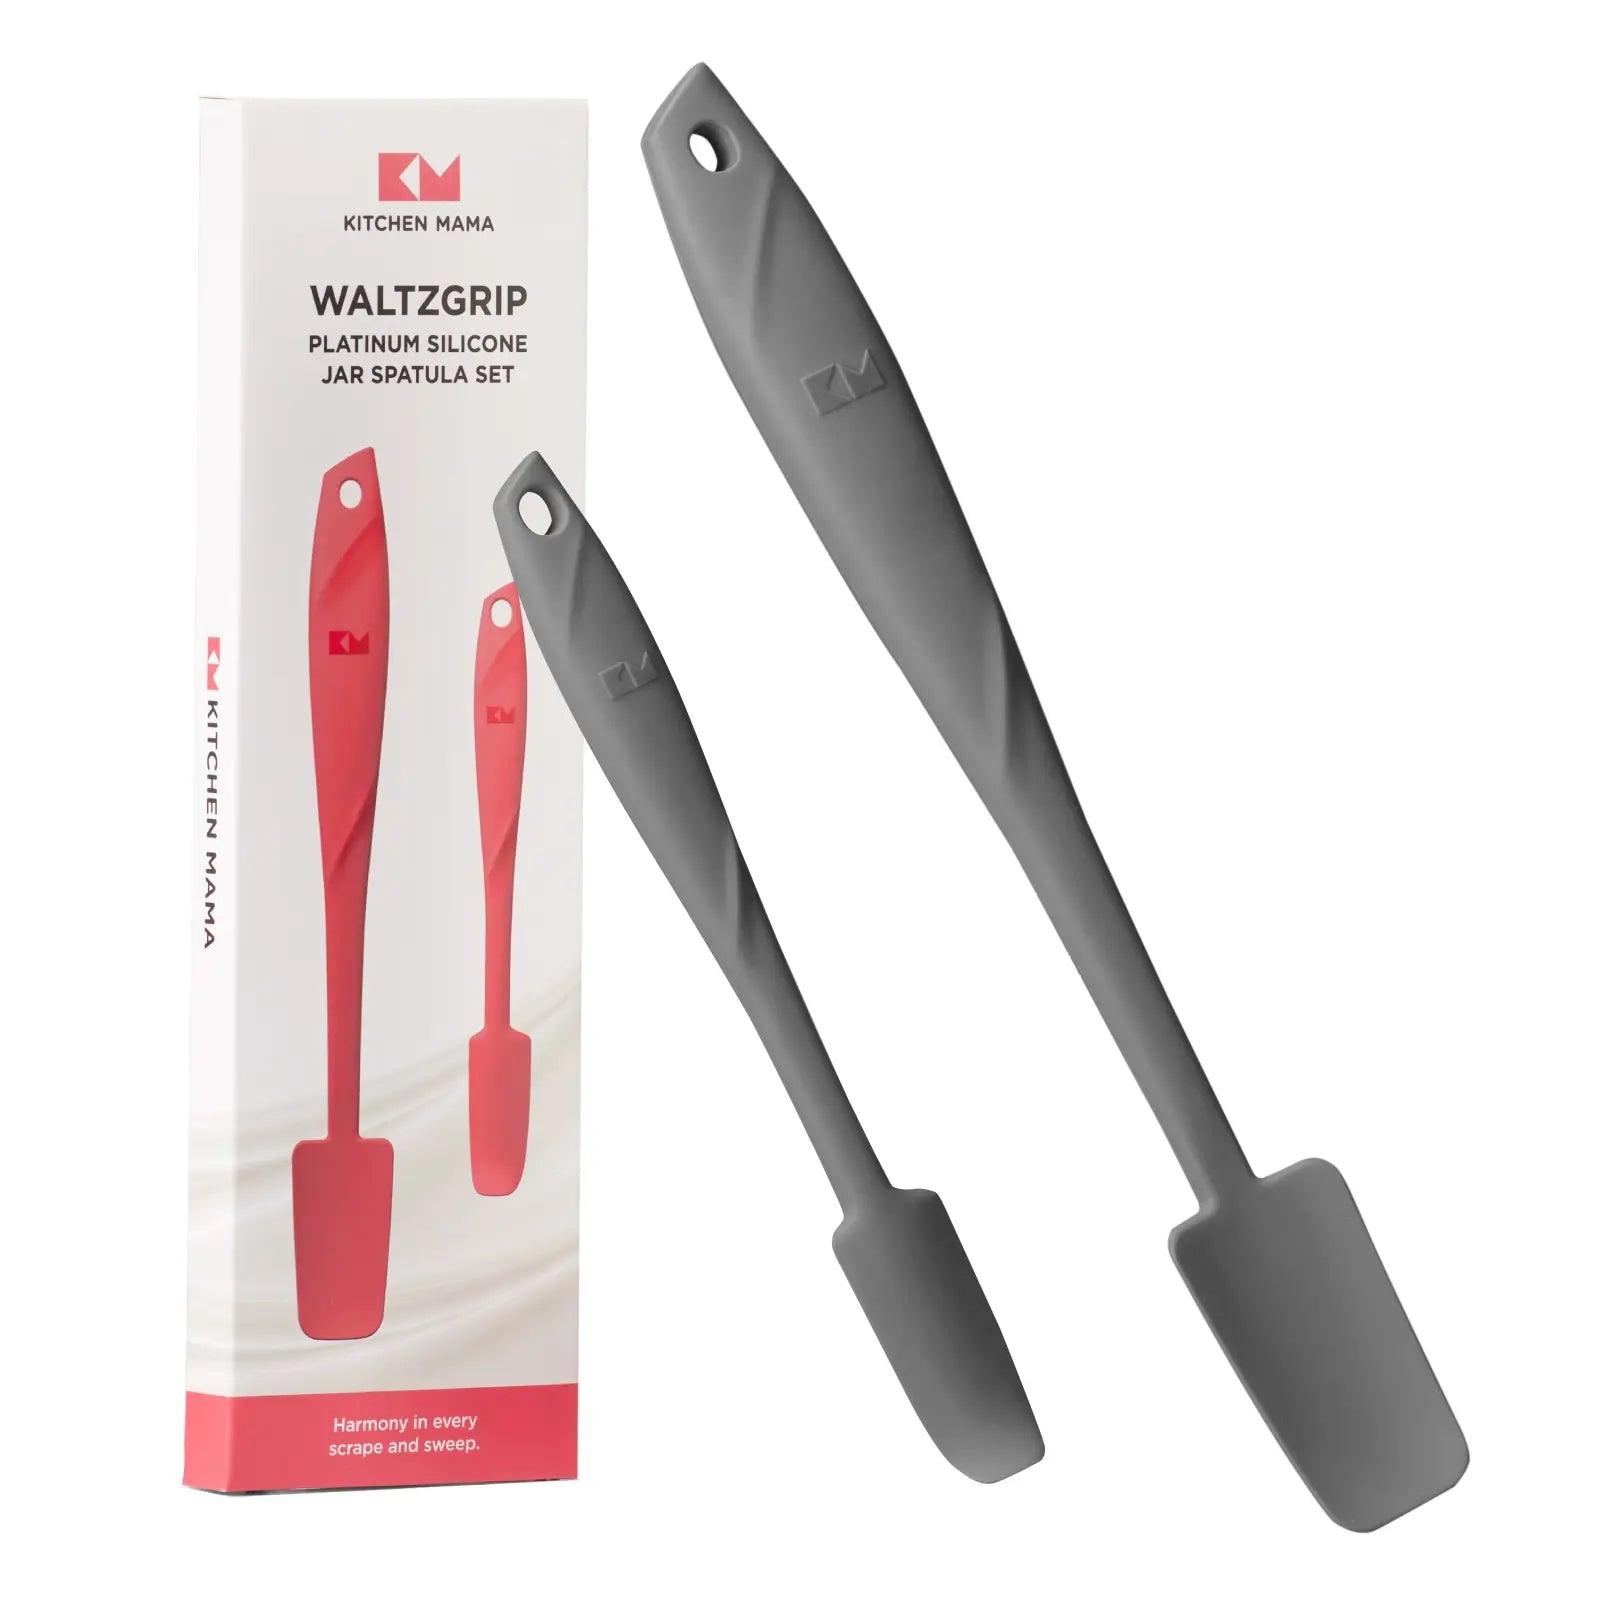 Kitchen Mama silicone jar spatula, Waltzgrip, platinum silicone jar spatula set, metal gray